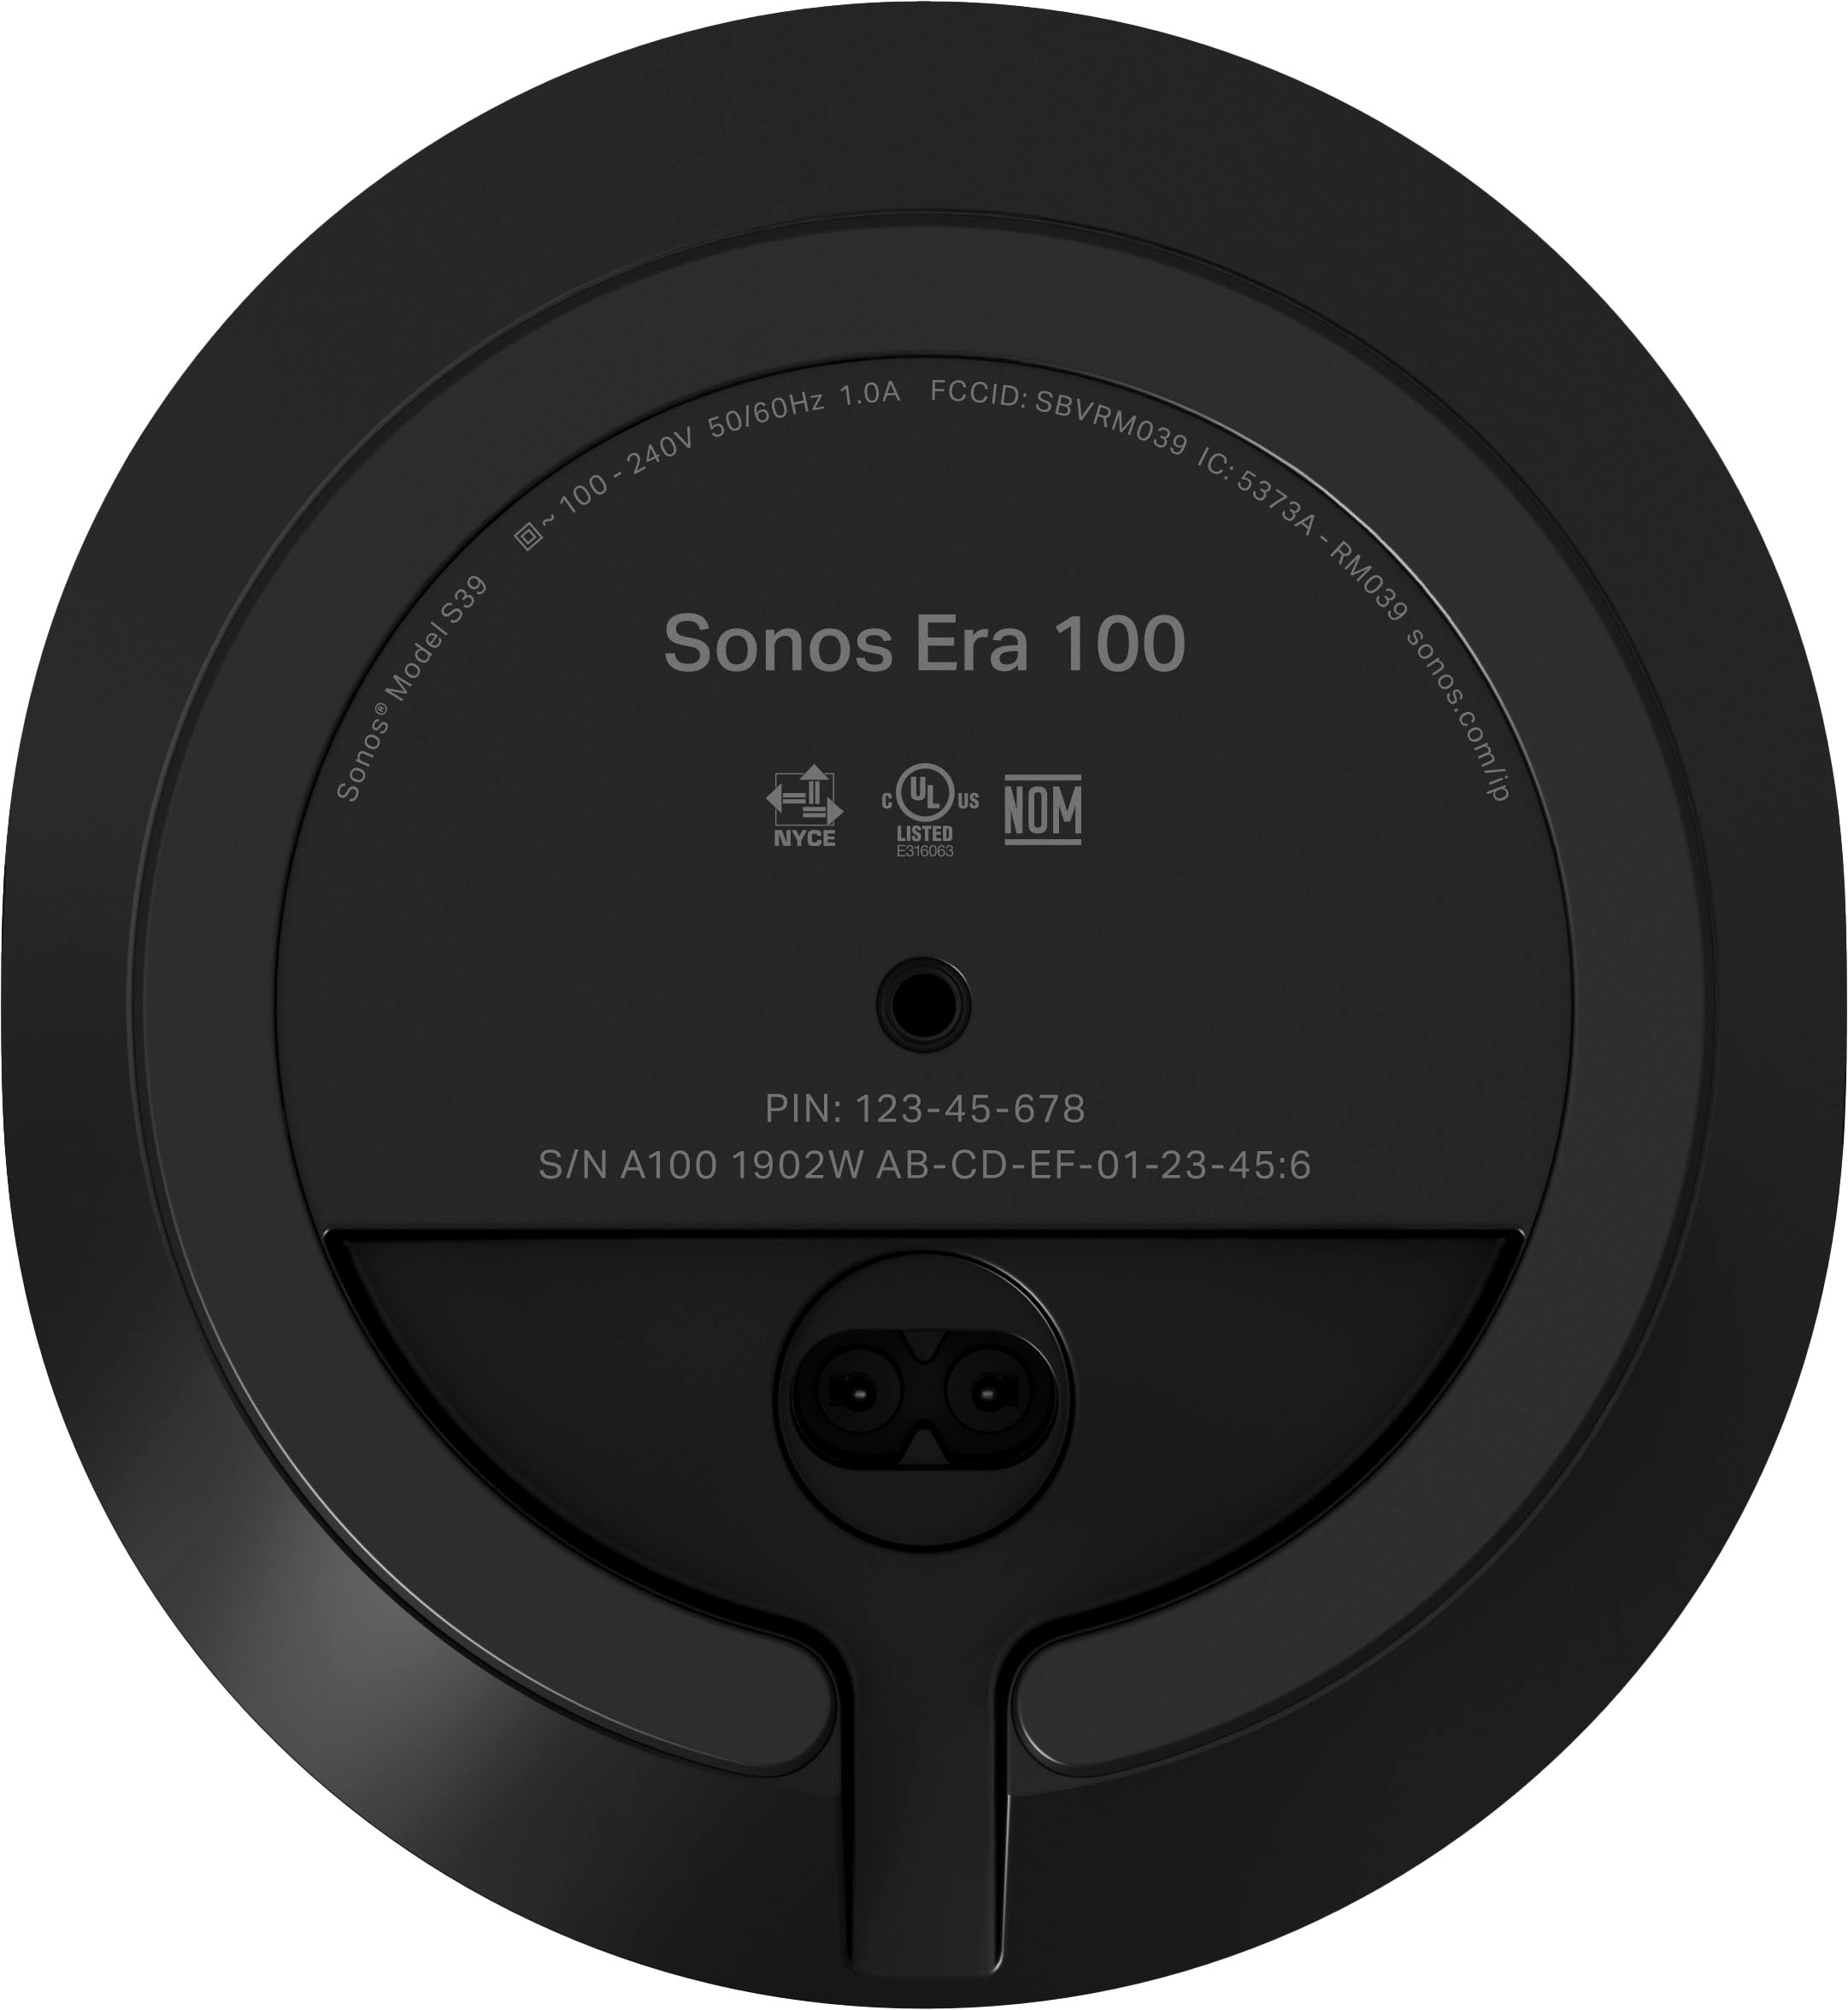 Sonos One review: 's Echo and Alexa inside a superior speaker